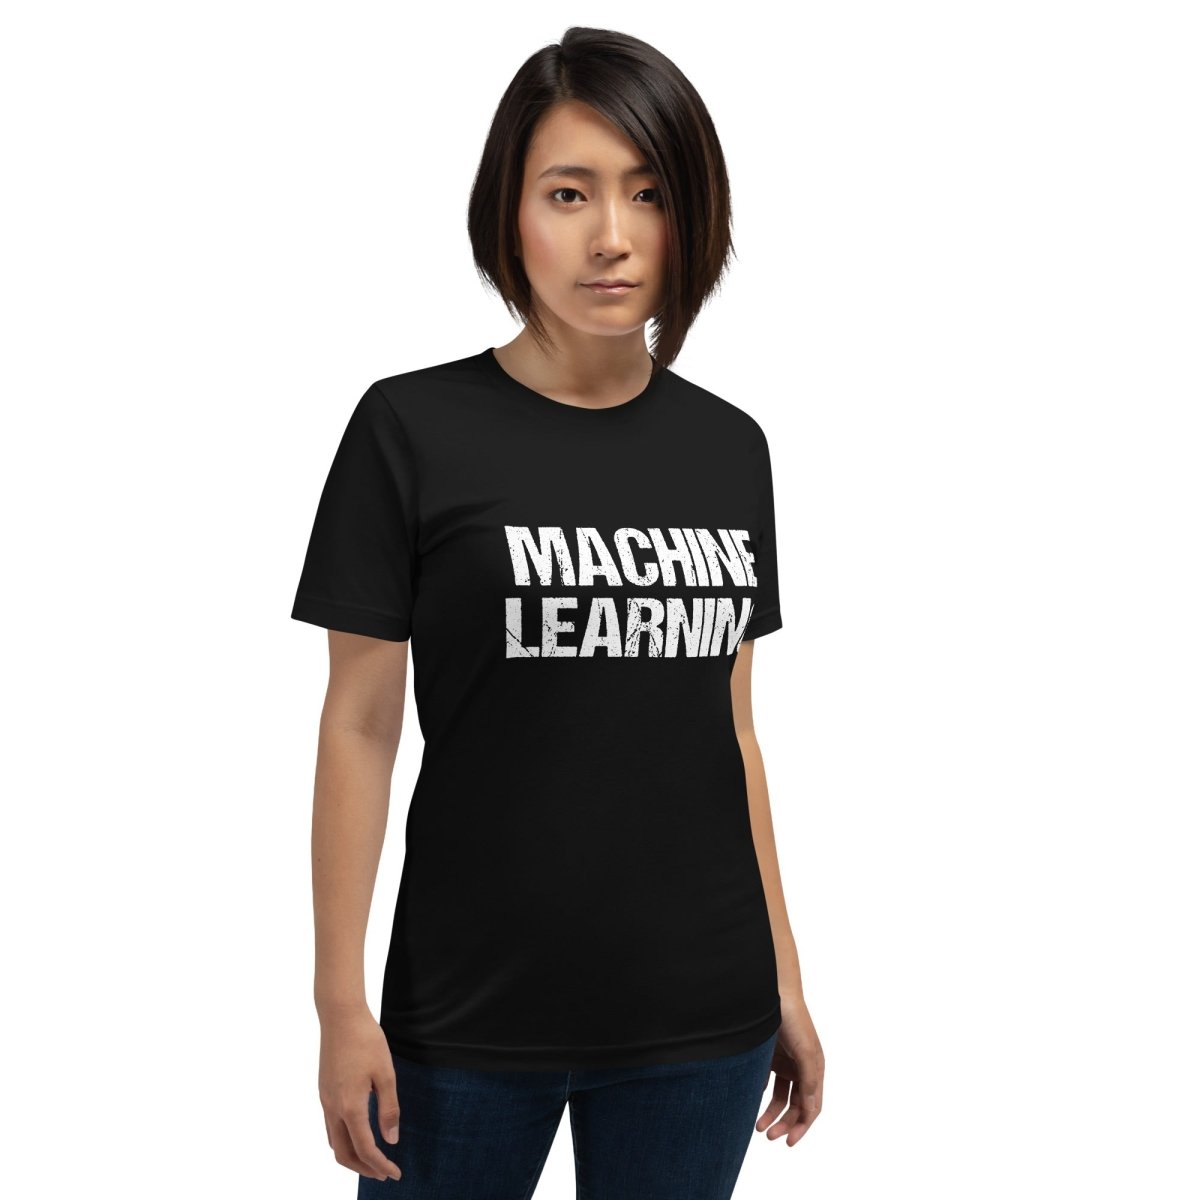 Machine Learning Distressed T - Shirt (unisex) - Black - AI Store